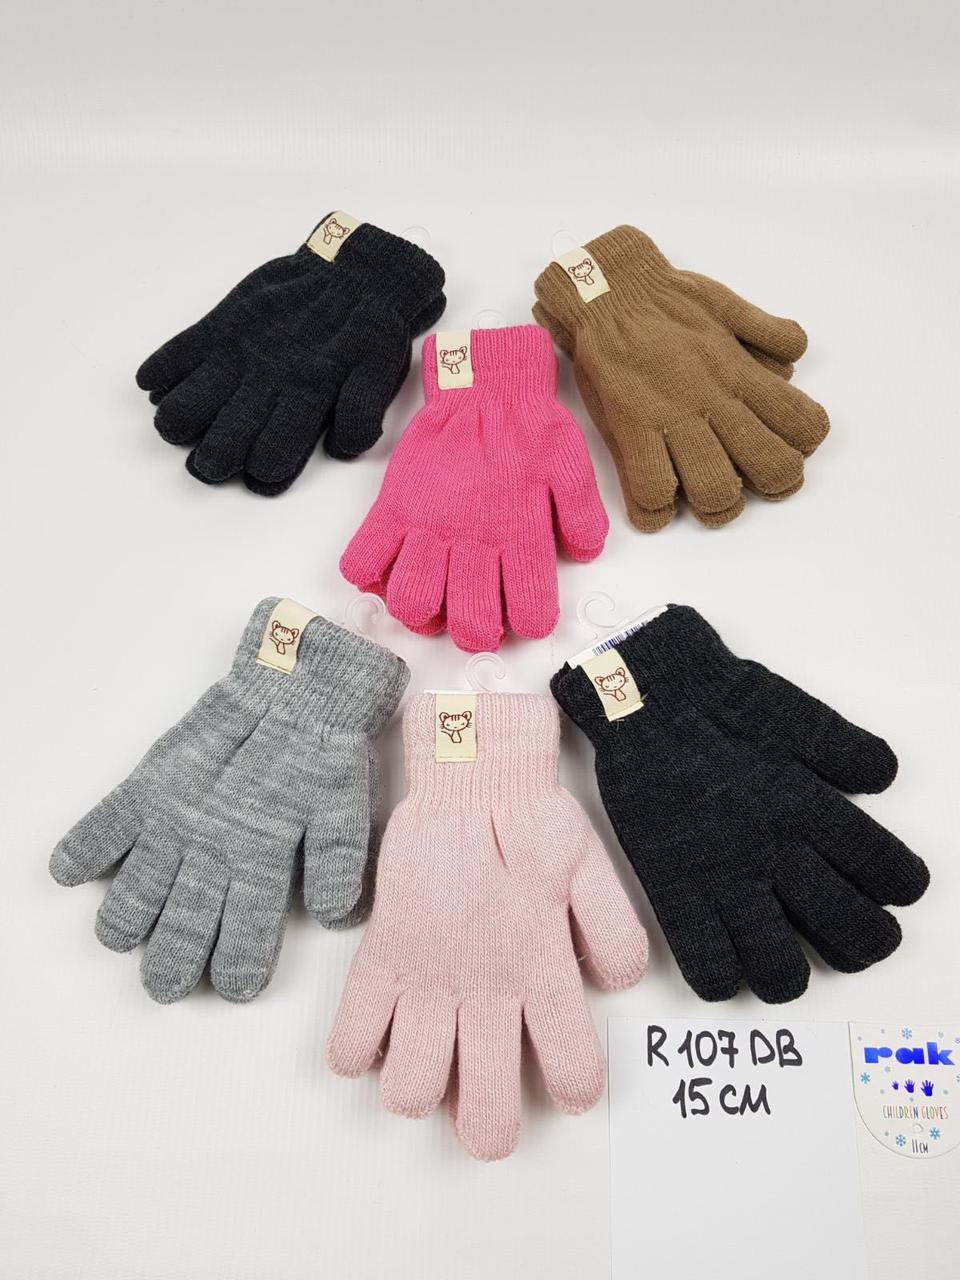 Дитячі польські утеплені рукавиці для дівчат р. 15 см (4-6 р) (6 шт. набір)